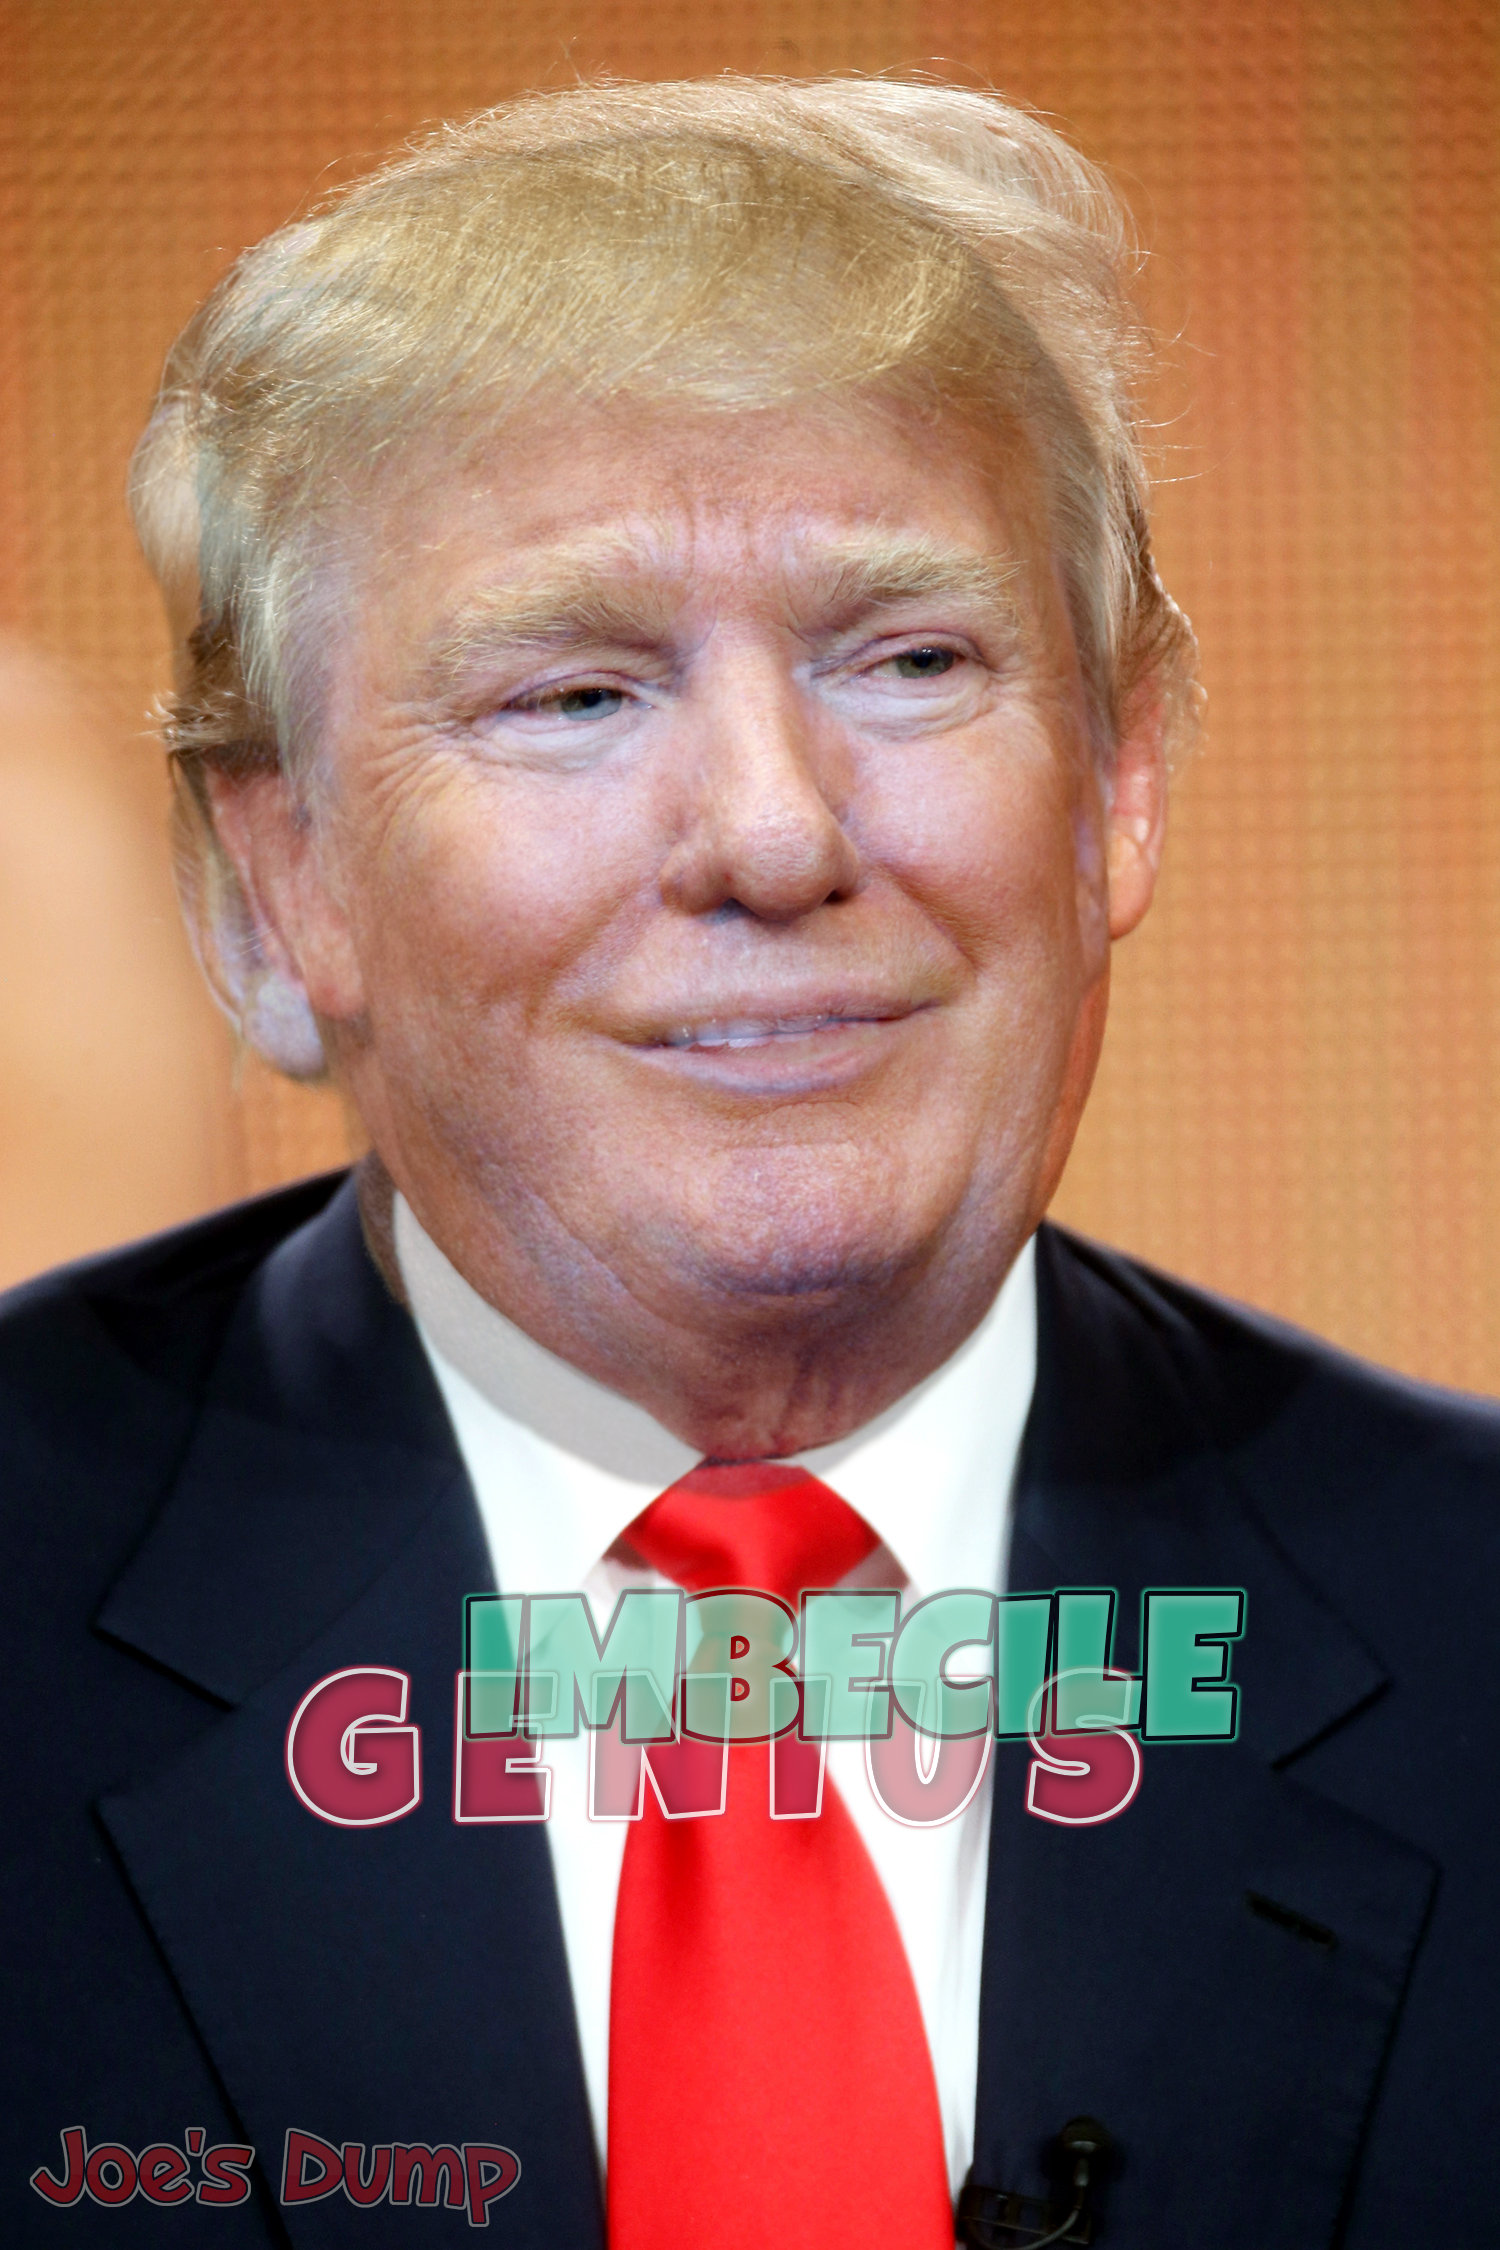 Trump Genius combo JoesDump